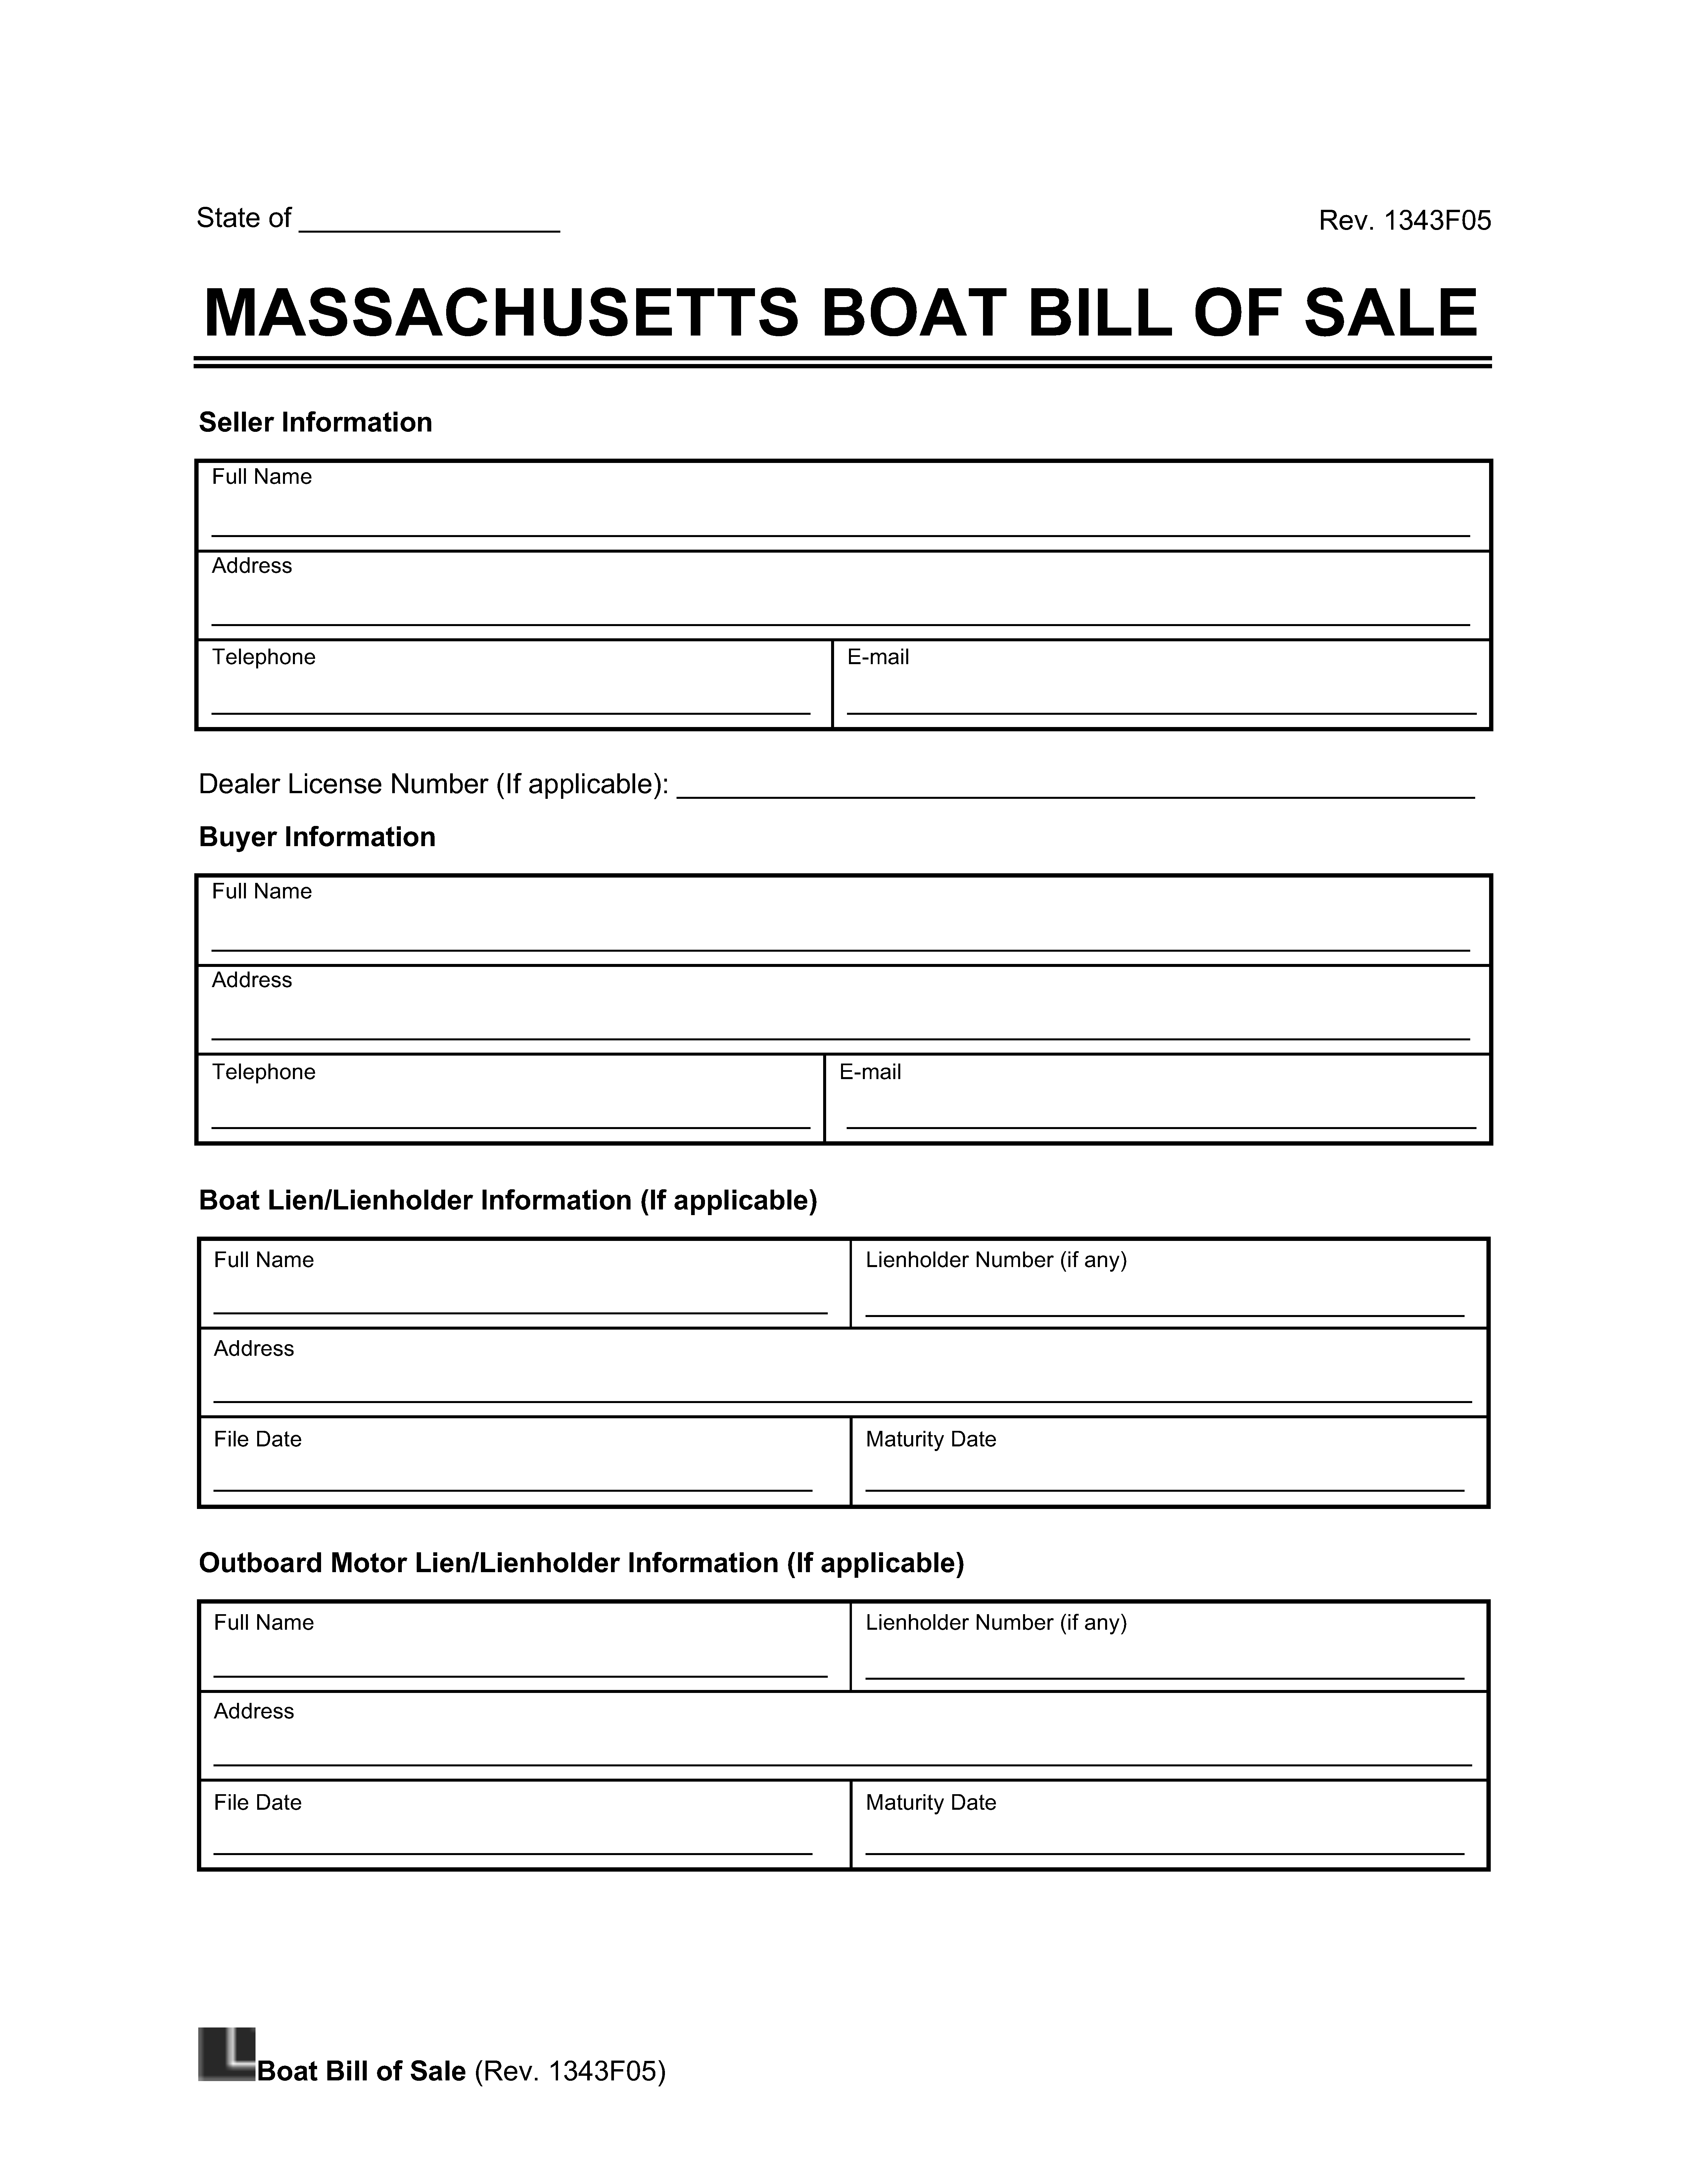 Massachusetts Boat Bill of Sale Template